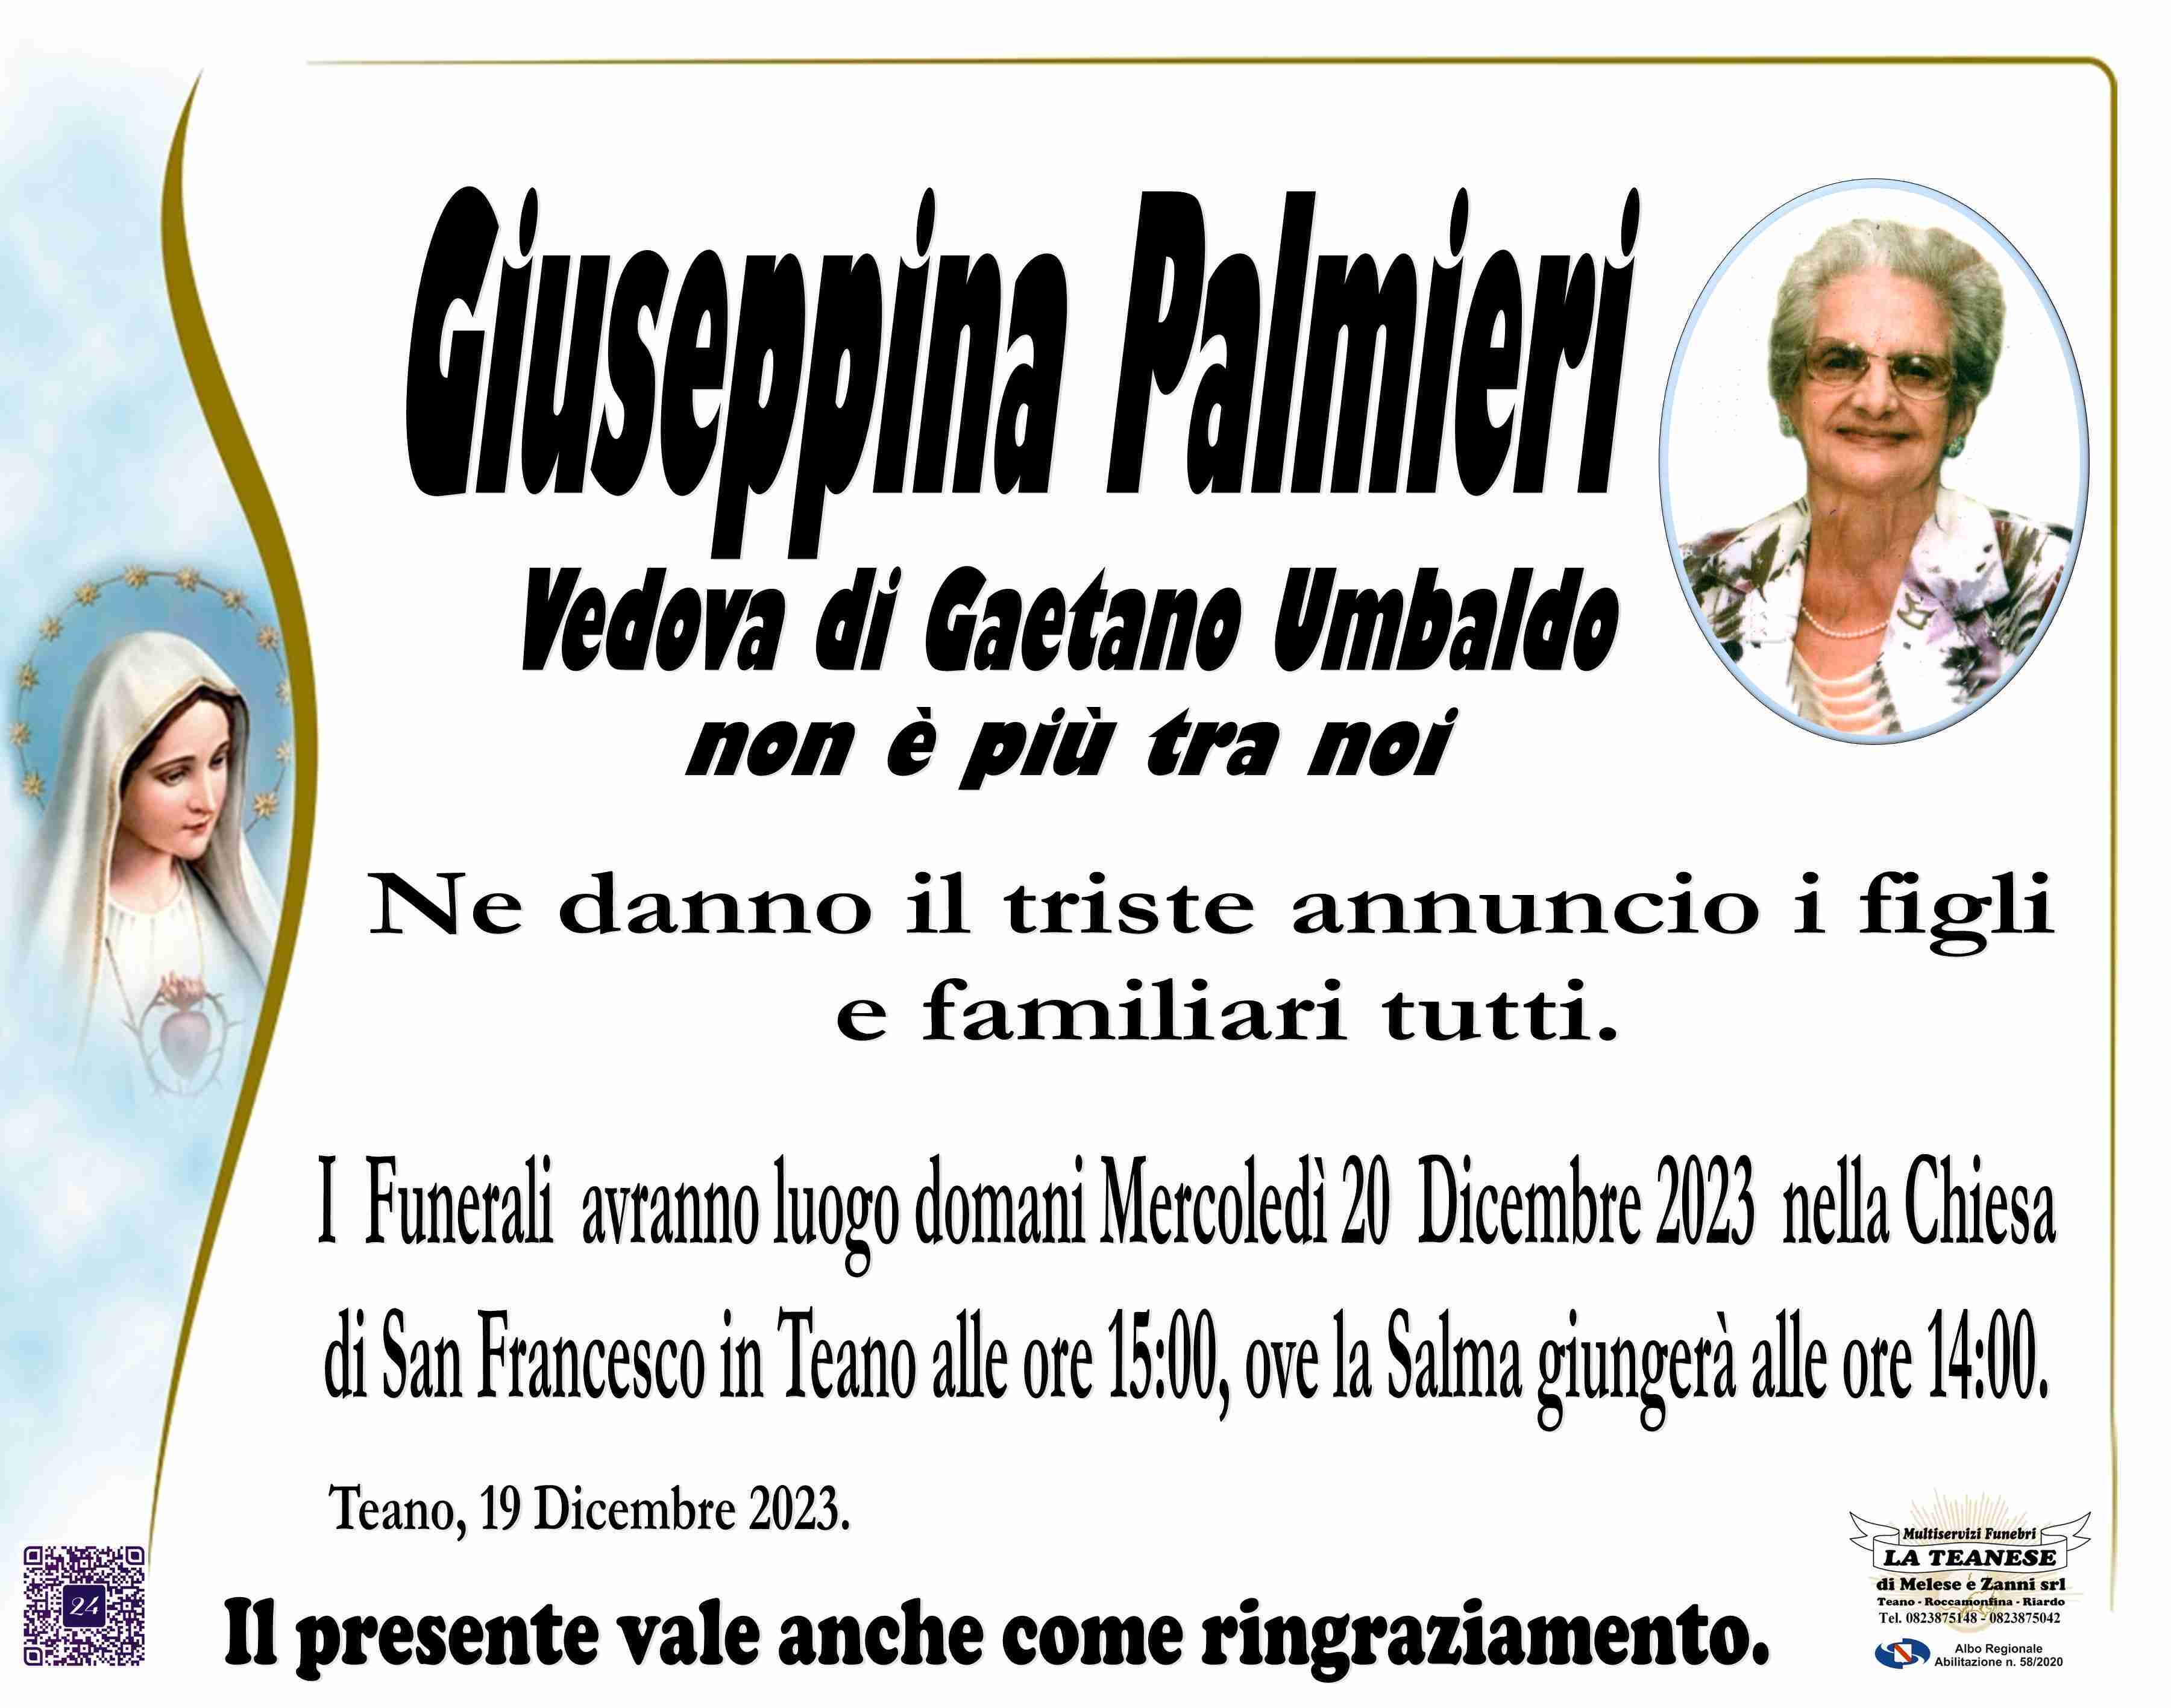 Giuseppina Palmieri